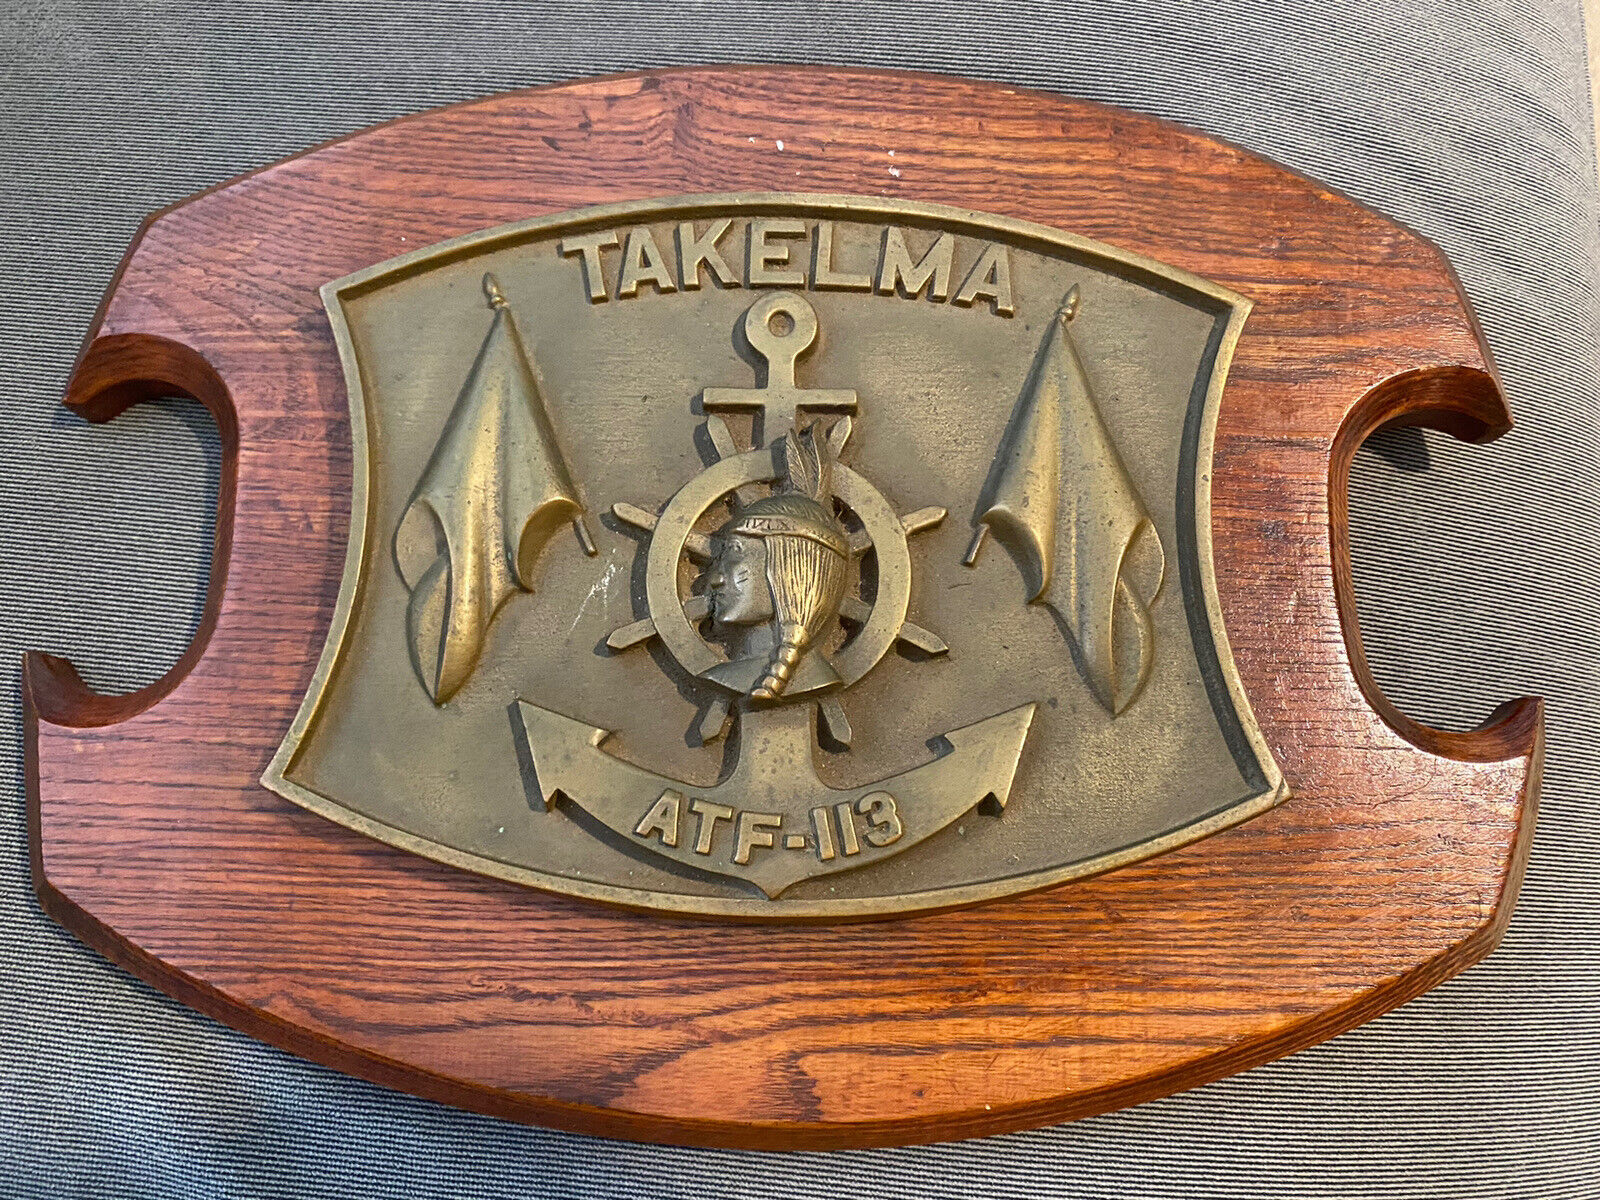 US Navy Ship Takelma ATF-113 Pearl Harbor Native American Heavy 3D Brass Plaque